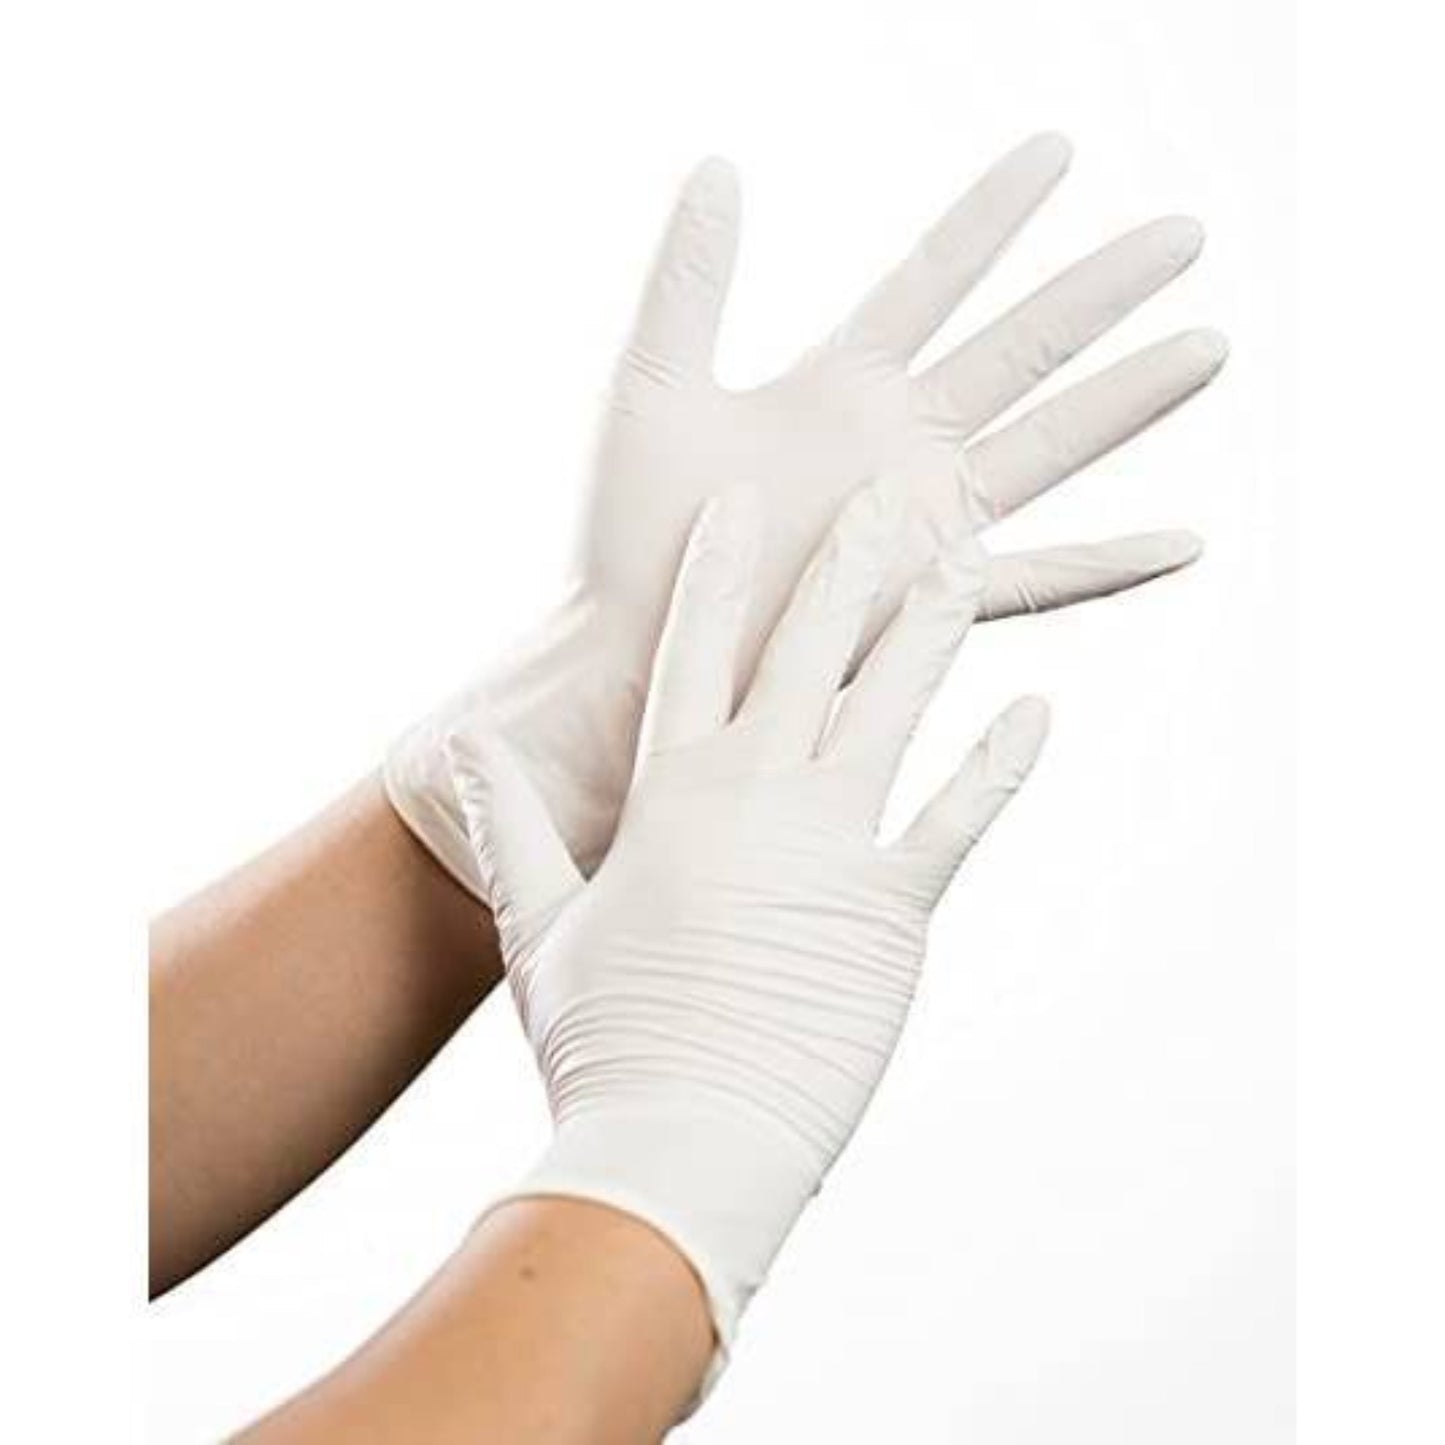 50pc Vinyl Gloves Powder Free One Size White Gloves Nicole Collection   